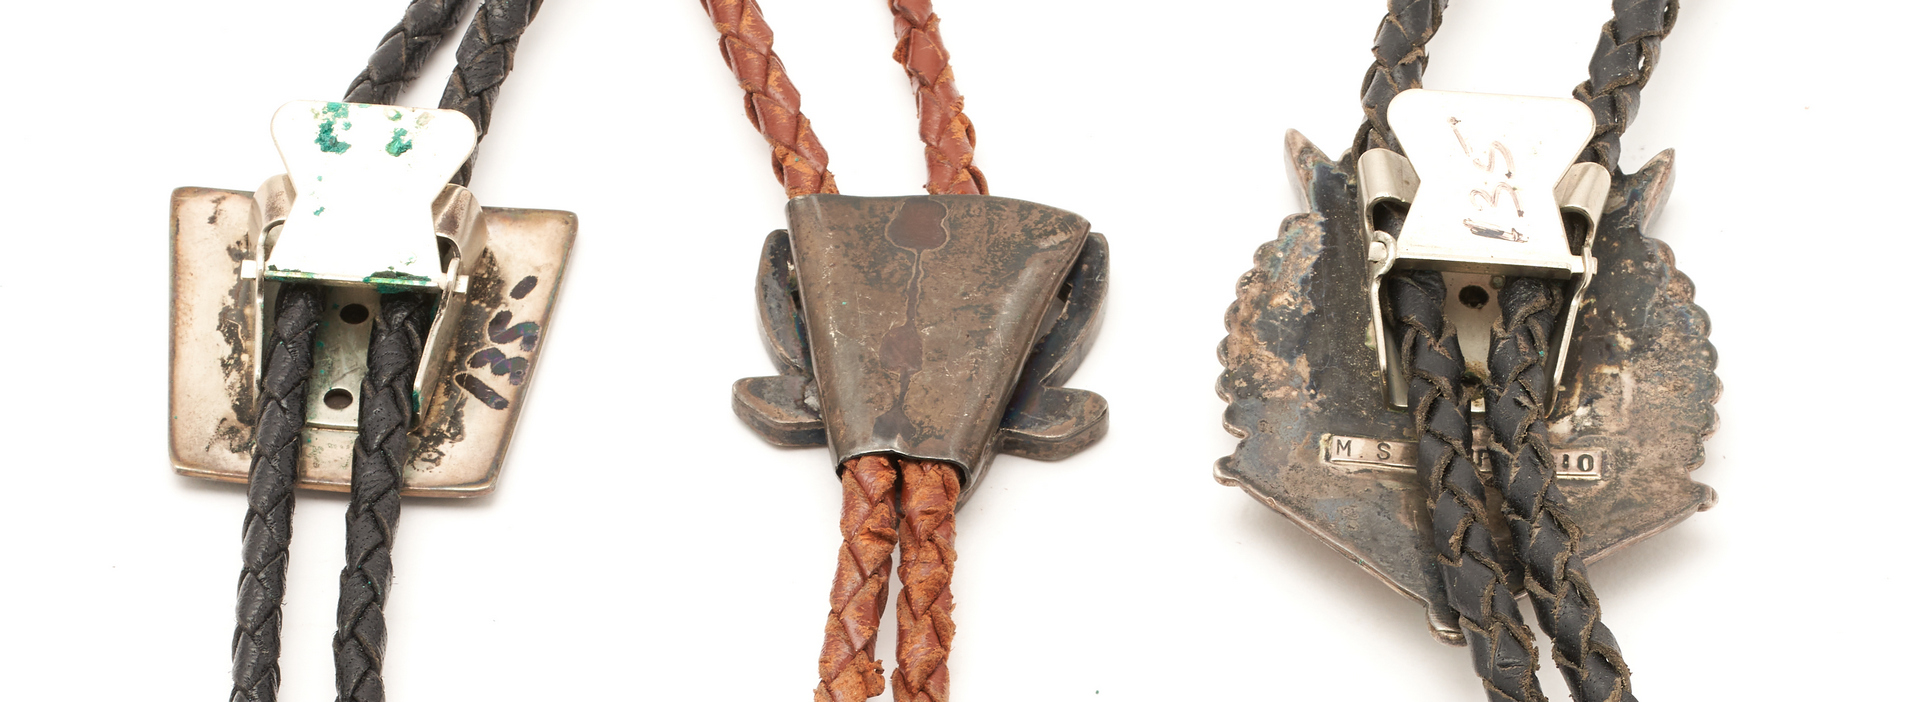 Lot 619: 8 Native American Zuni Jewelry Items, incl. Bolos